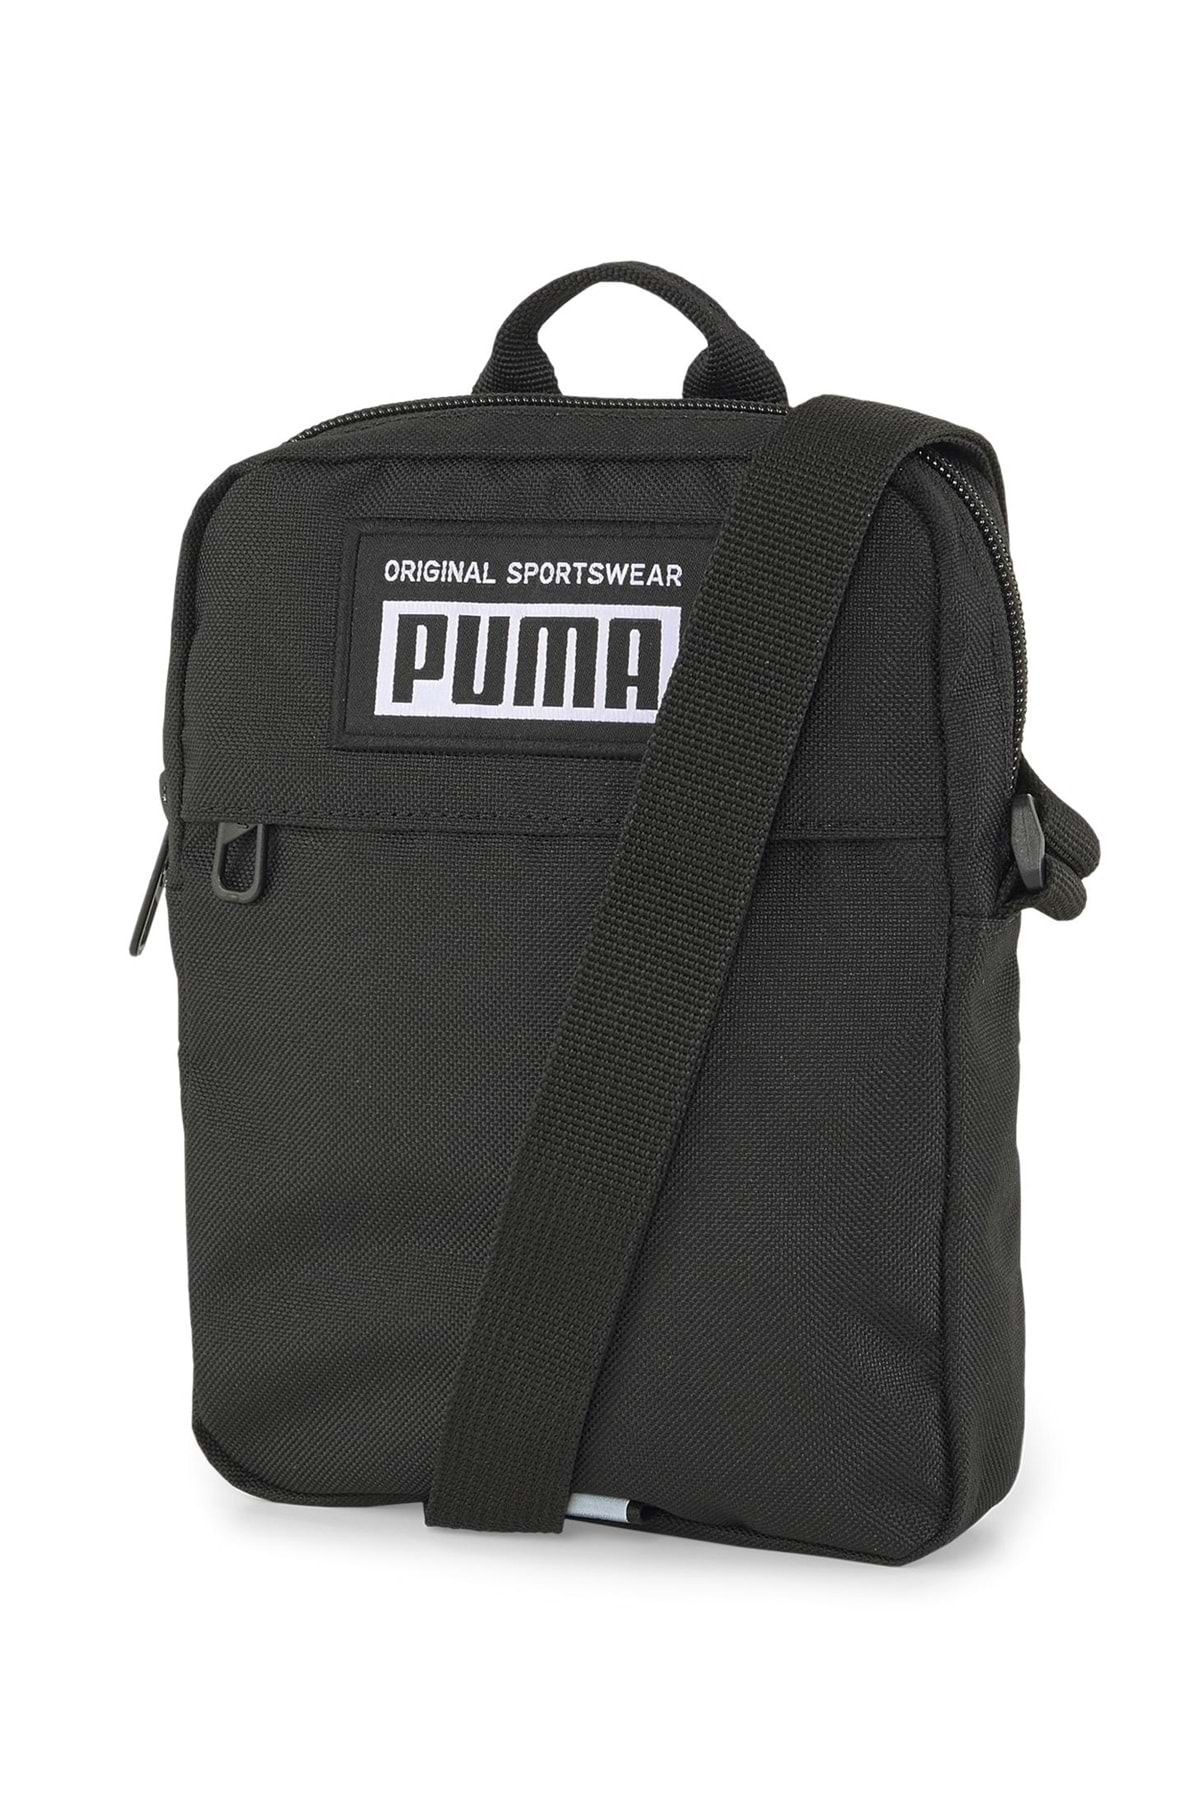 Puma 079135-01 Academy Portable Omuz Çantası Siyah